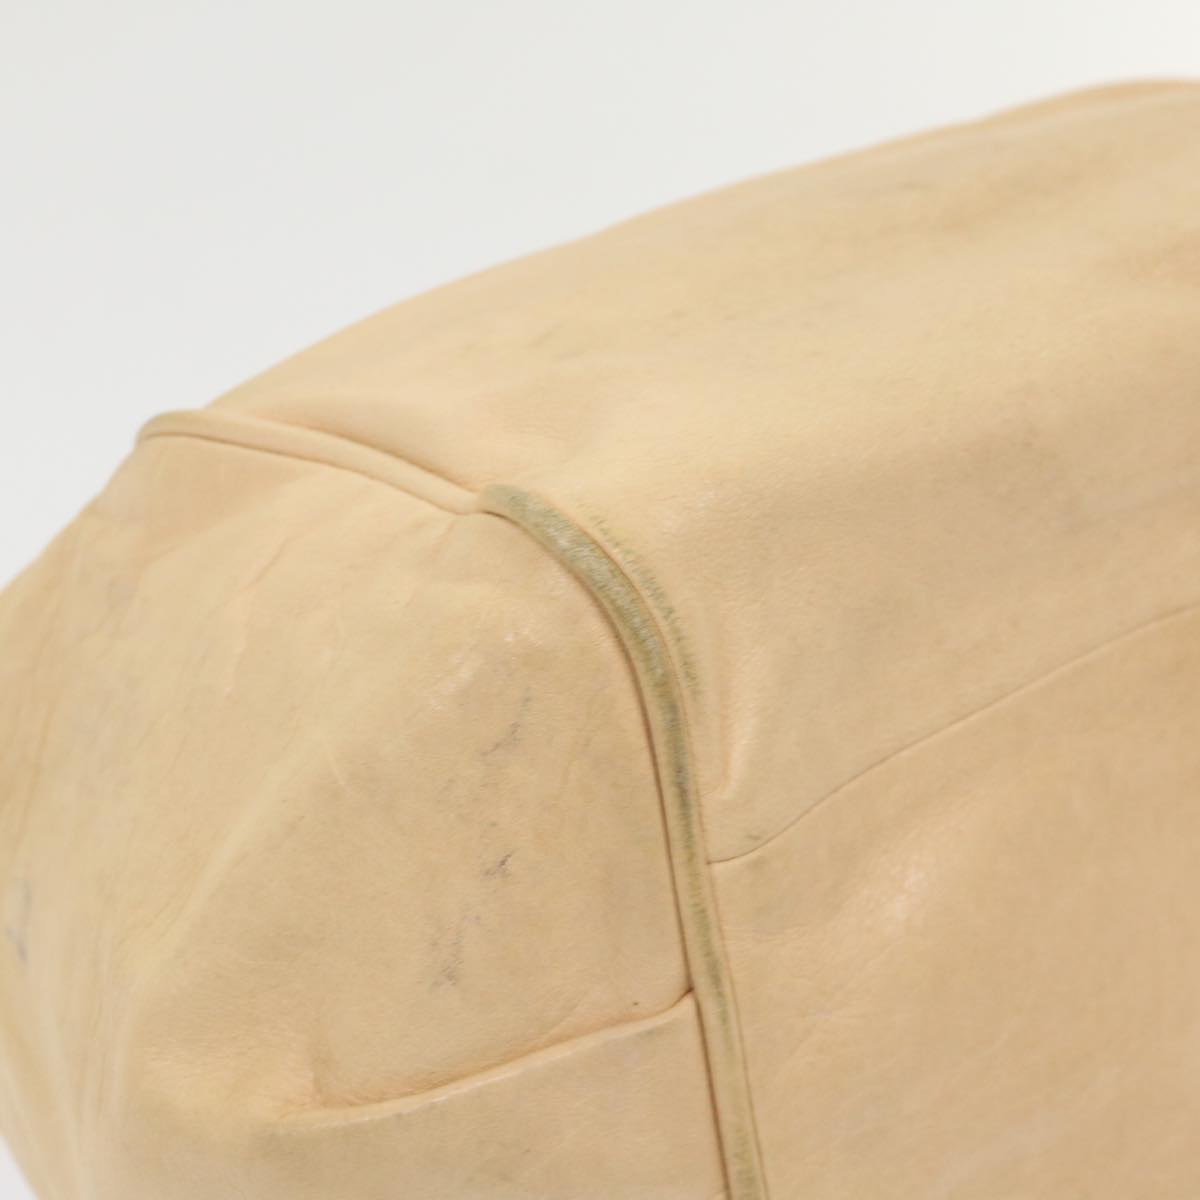 Chloe Hand Bag Leather 2way Shoulder Bag Beige 02-11-50 Auth bs6747